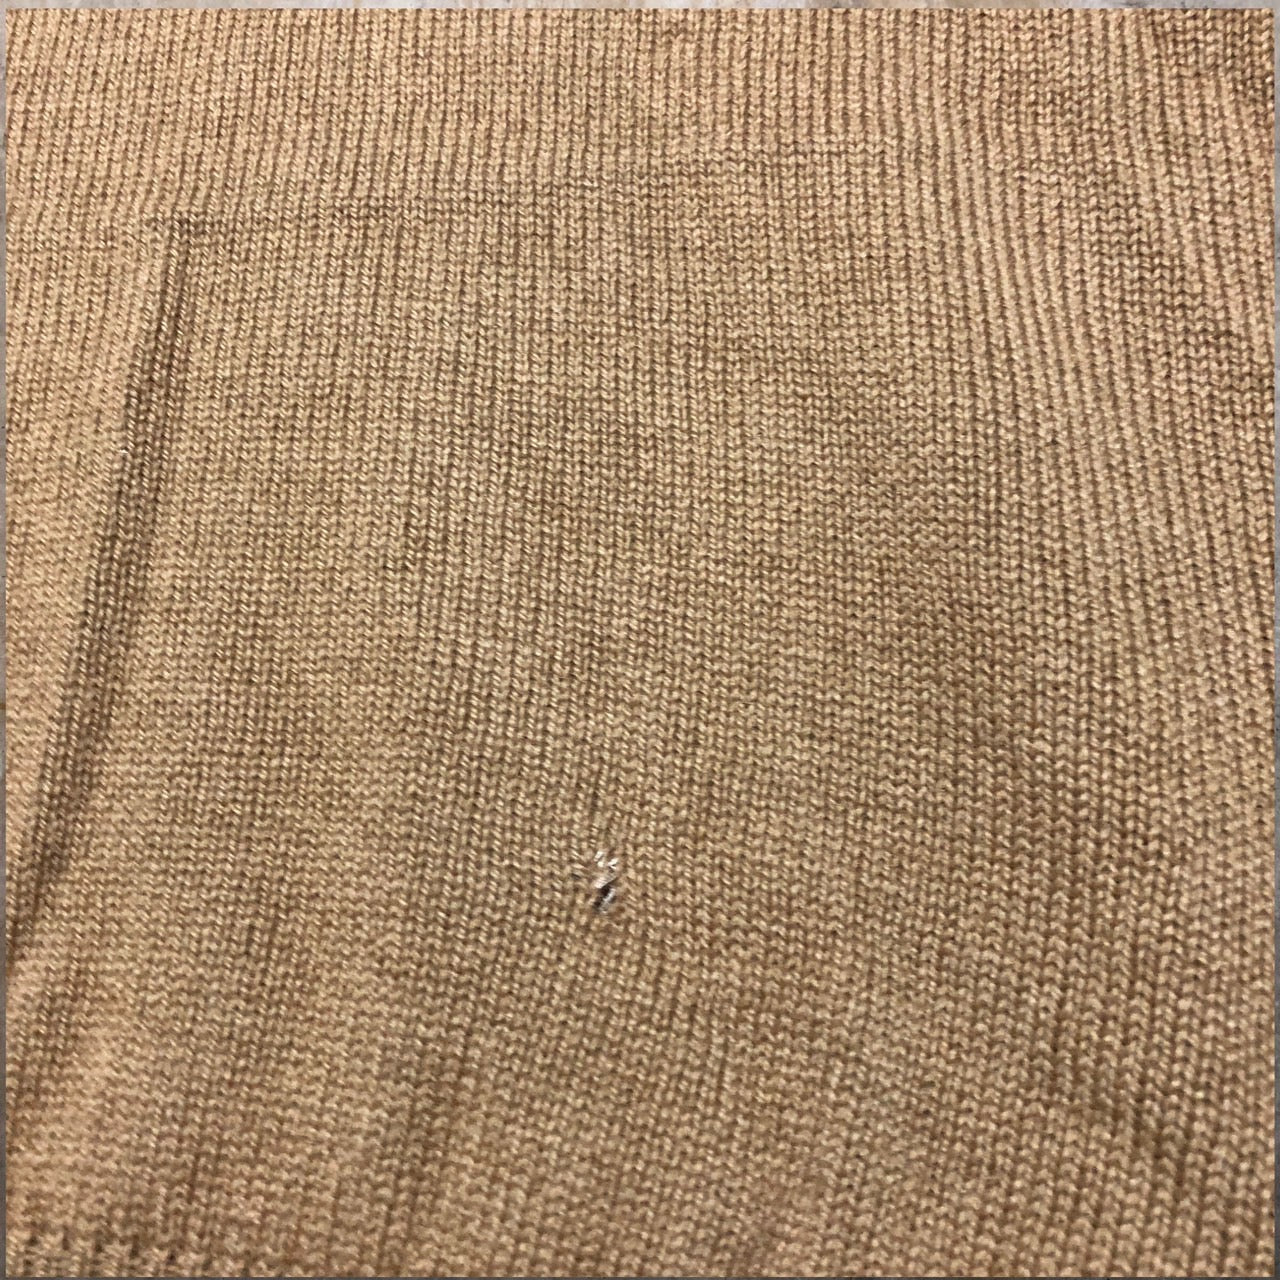 COMME des GARCONS HOMME(コムデギャルソンオム) 89's vintage camel wool pullover  knit/キャメルウールプルオーバーニット/80年代/ヴィンテージ HN-080050 SIZE FREE ベージュ AD1989 本人期